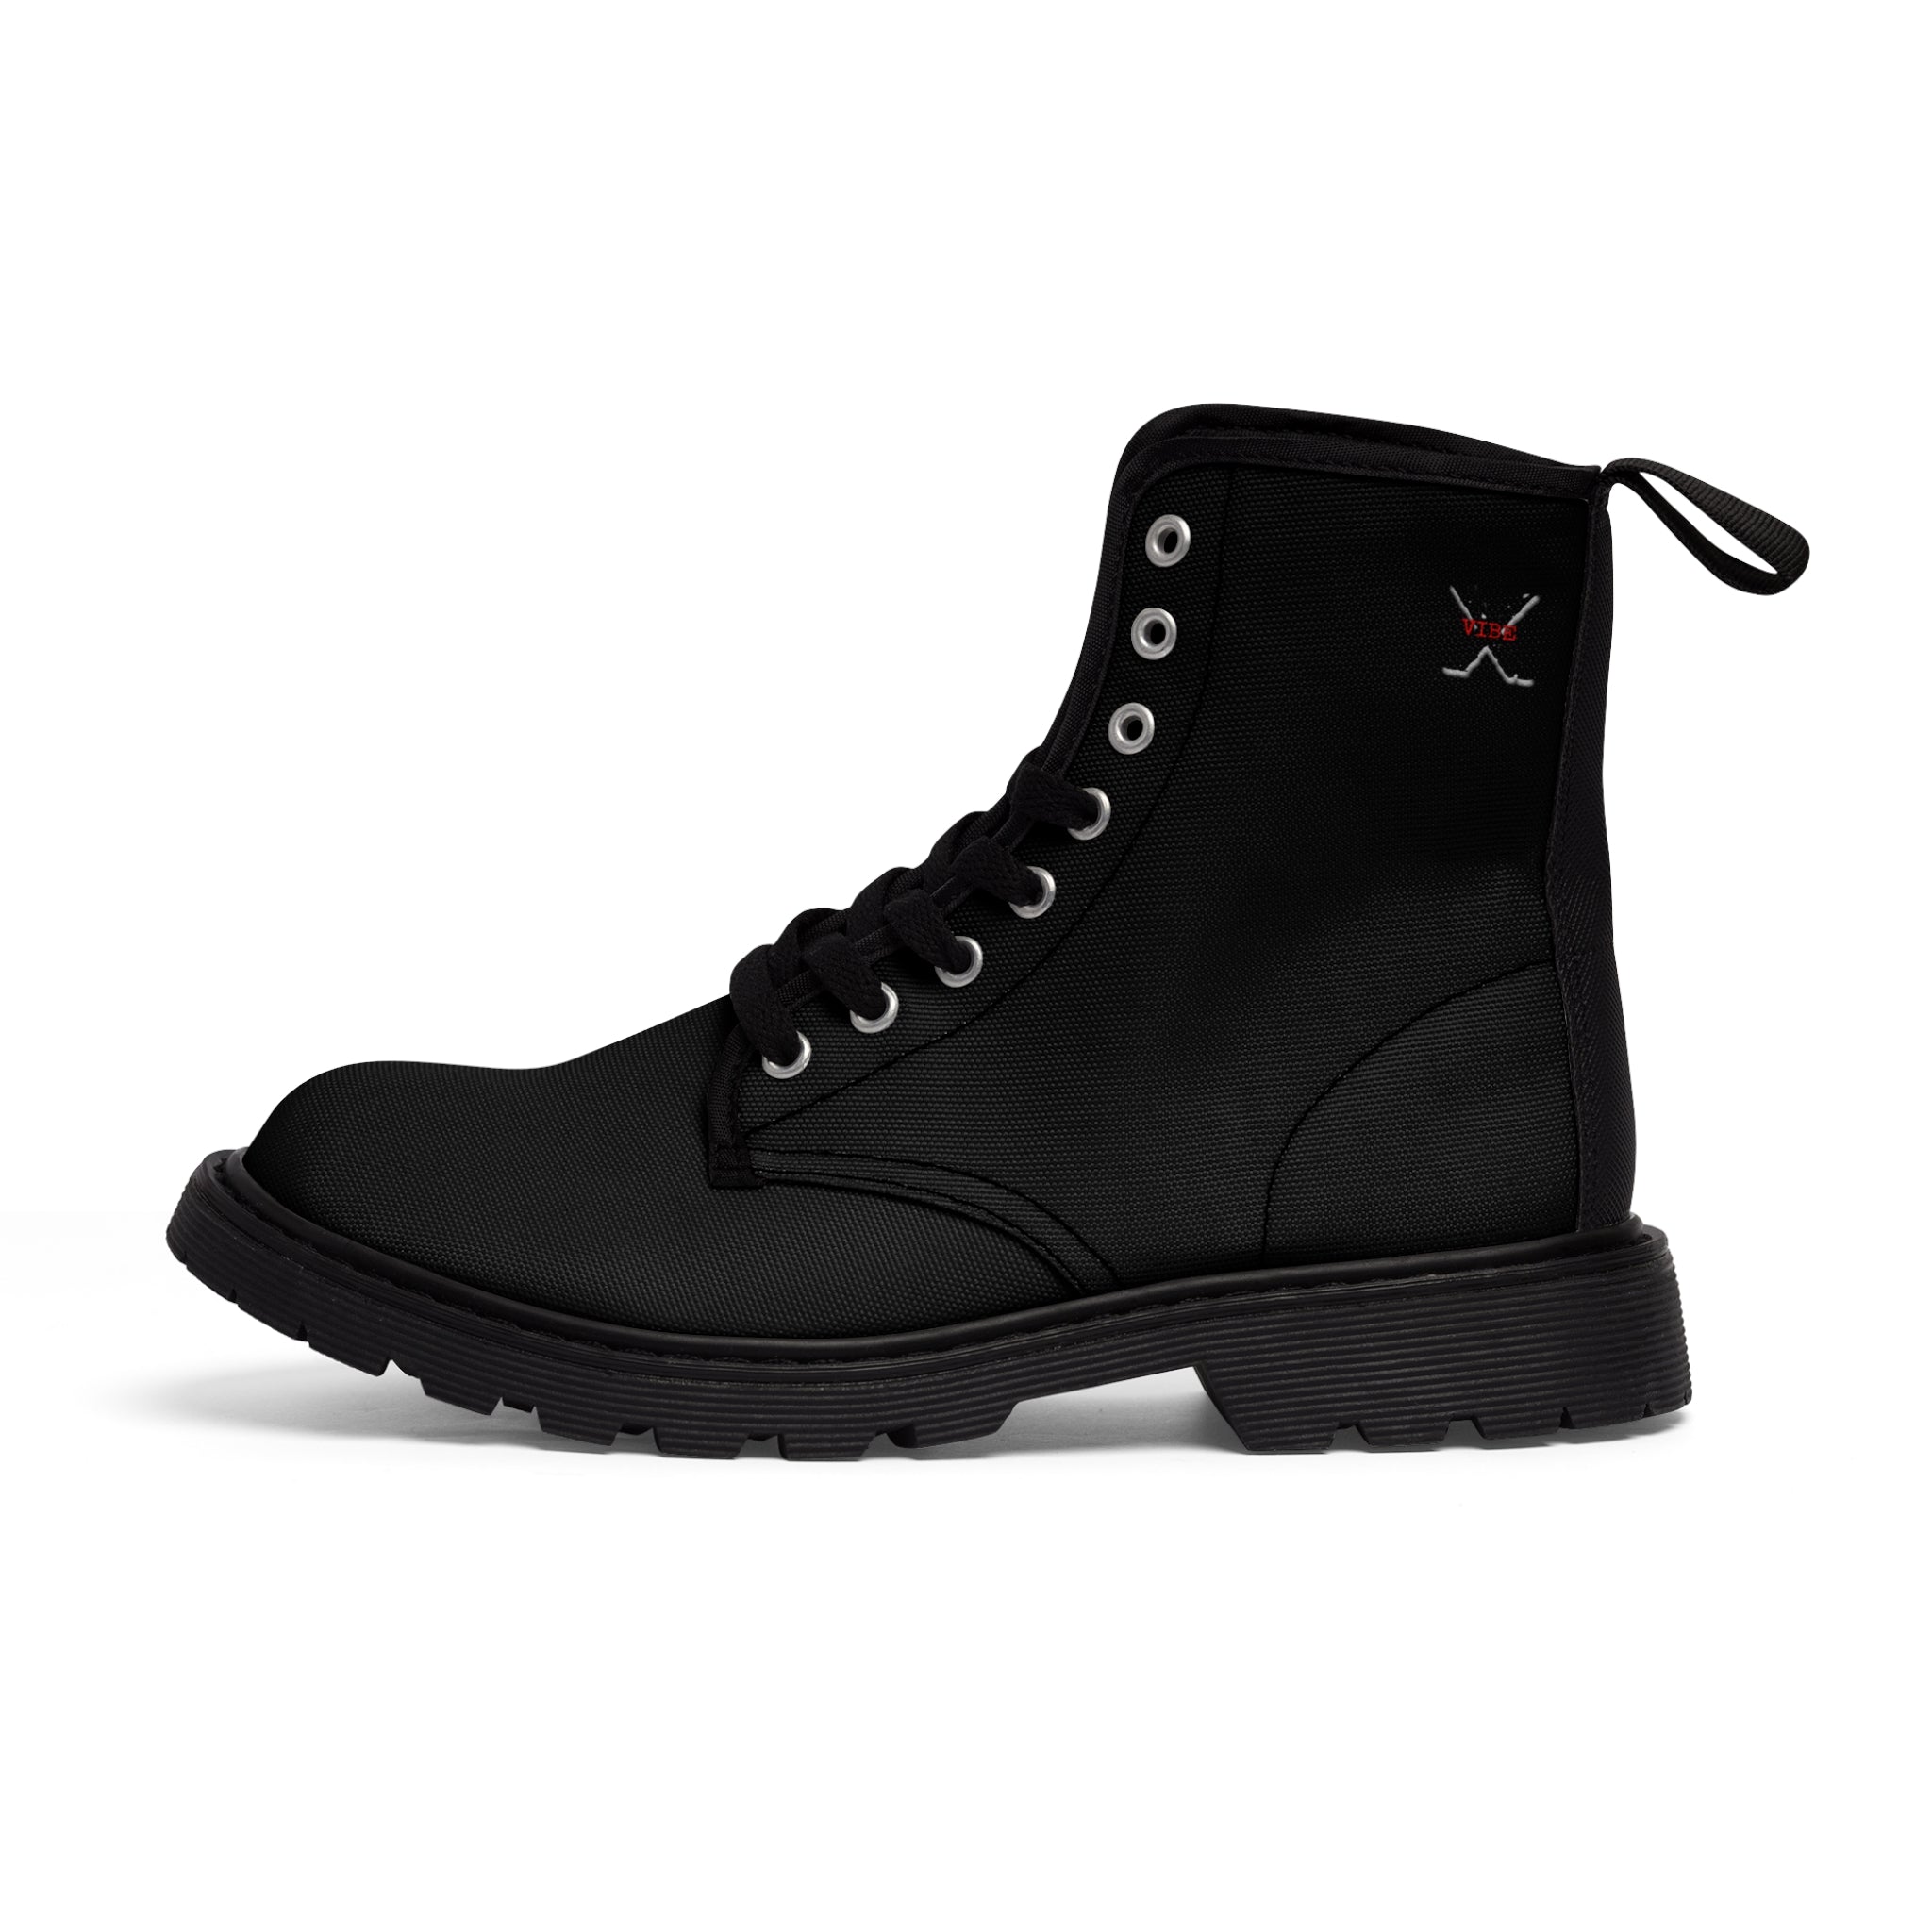 X-Vibe Men's Canvas Boots (Black/B)